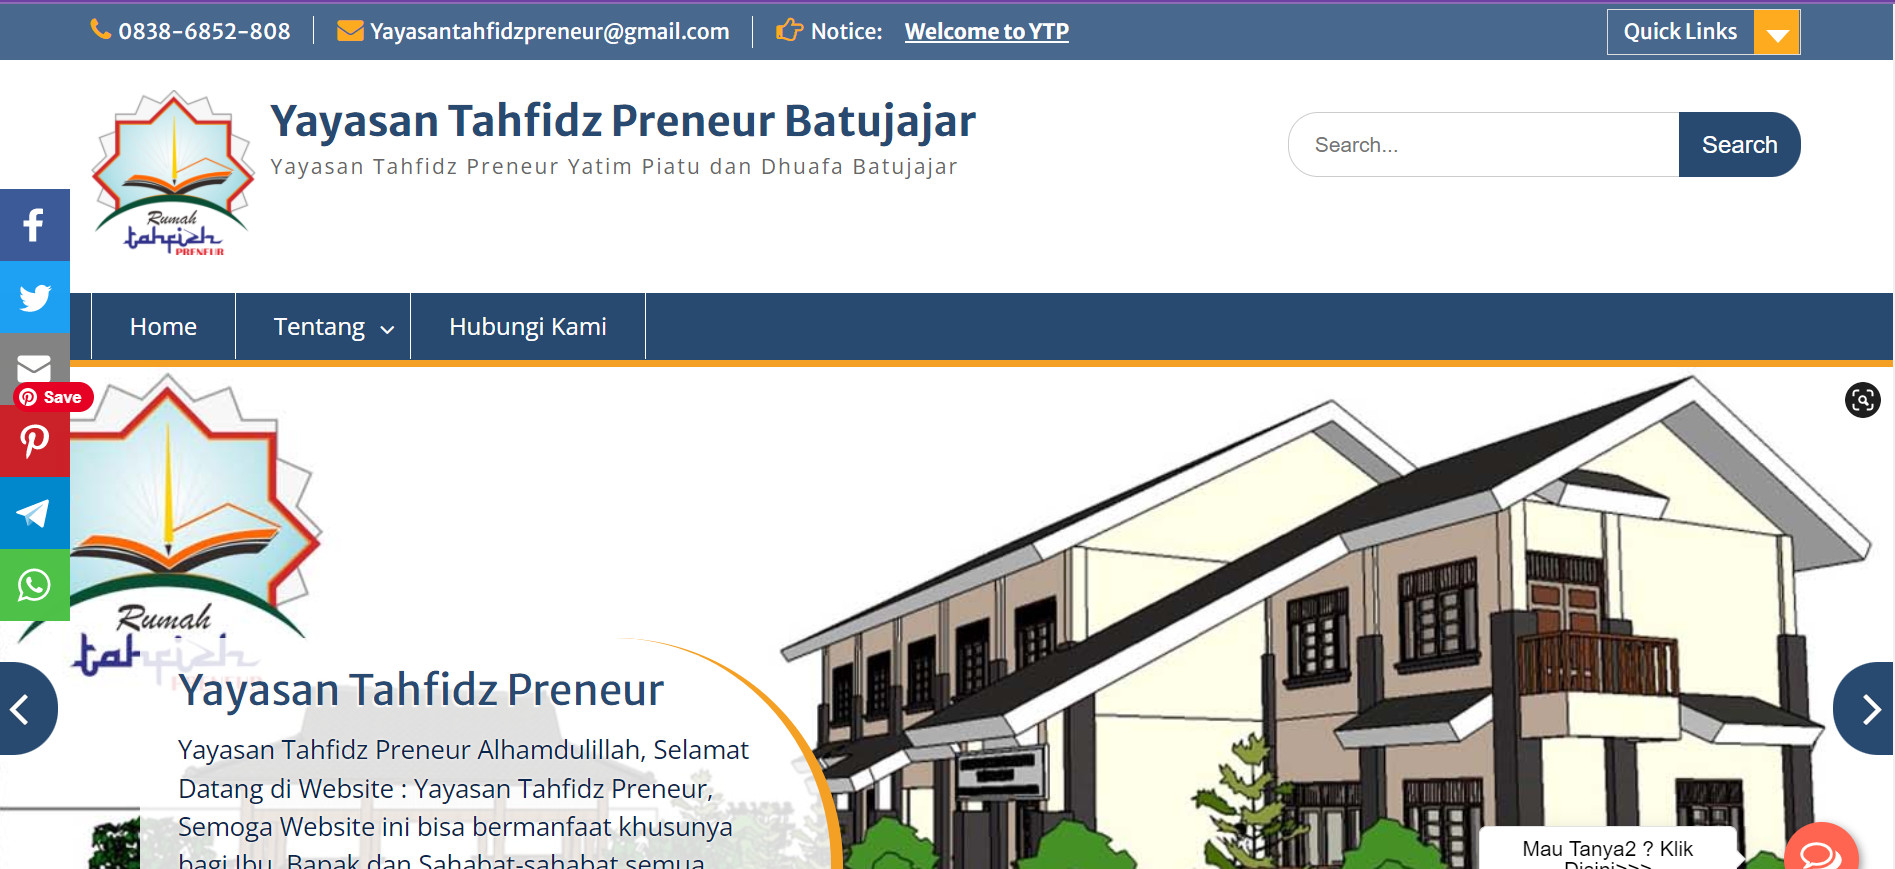 Yayasan tahfidz Preneur Batujajar